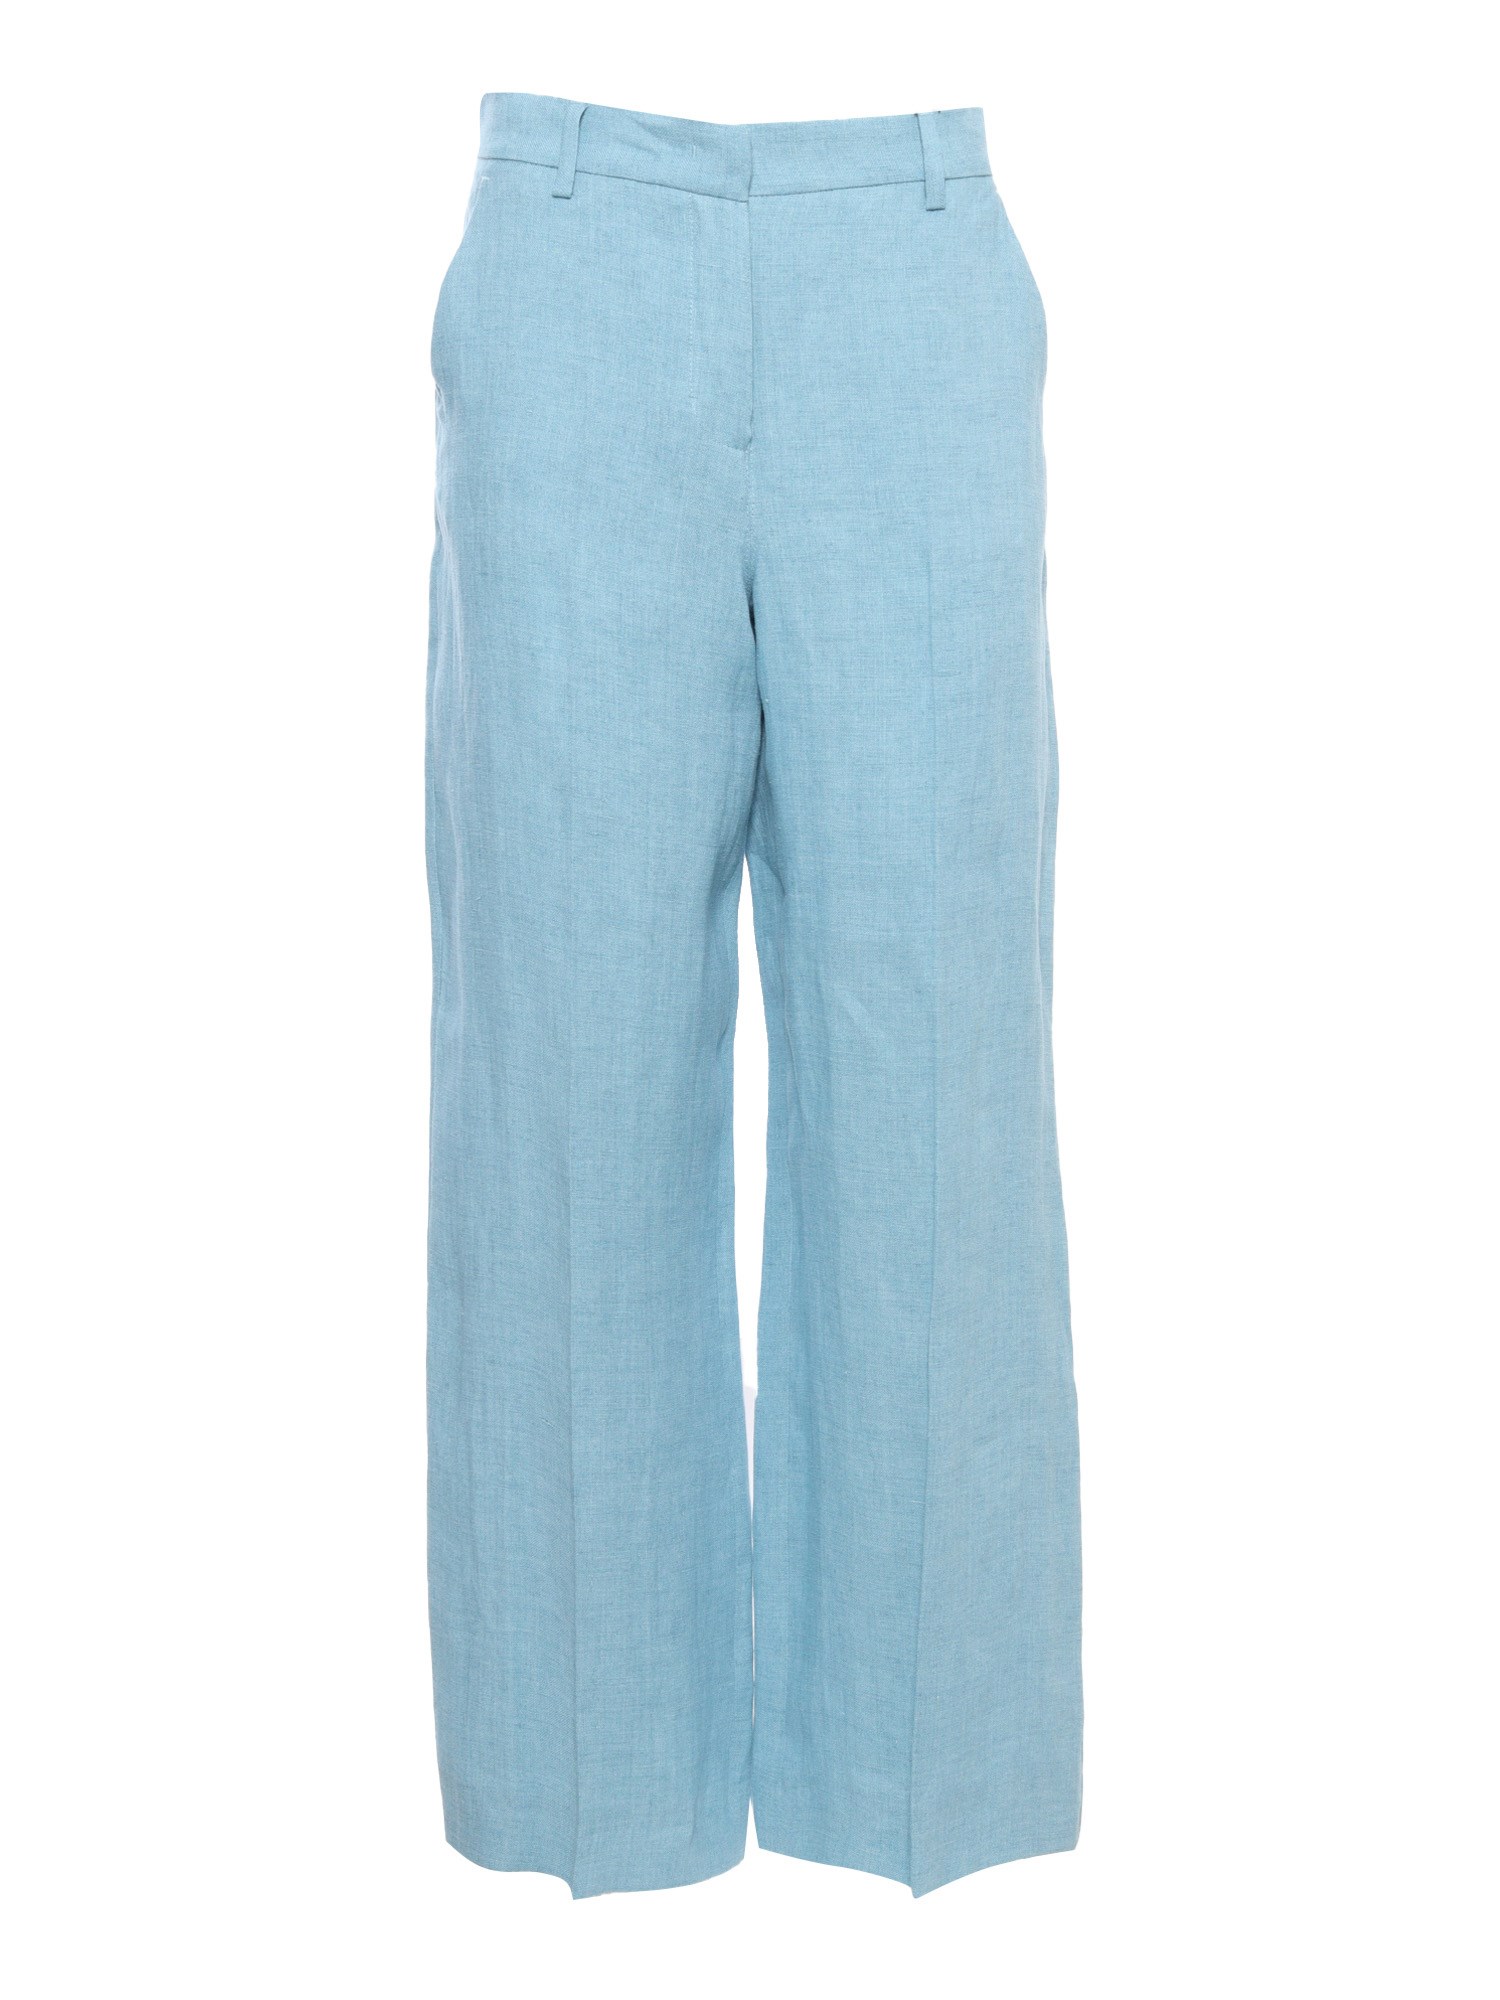 Max Mara Light Blue Malizia Trousers